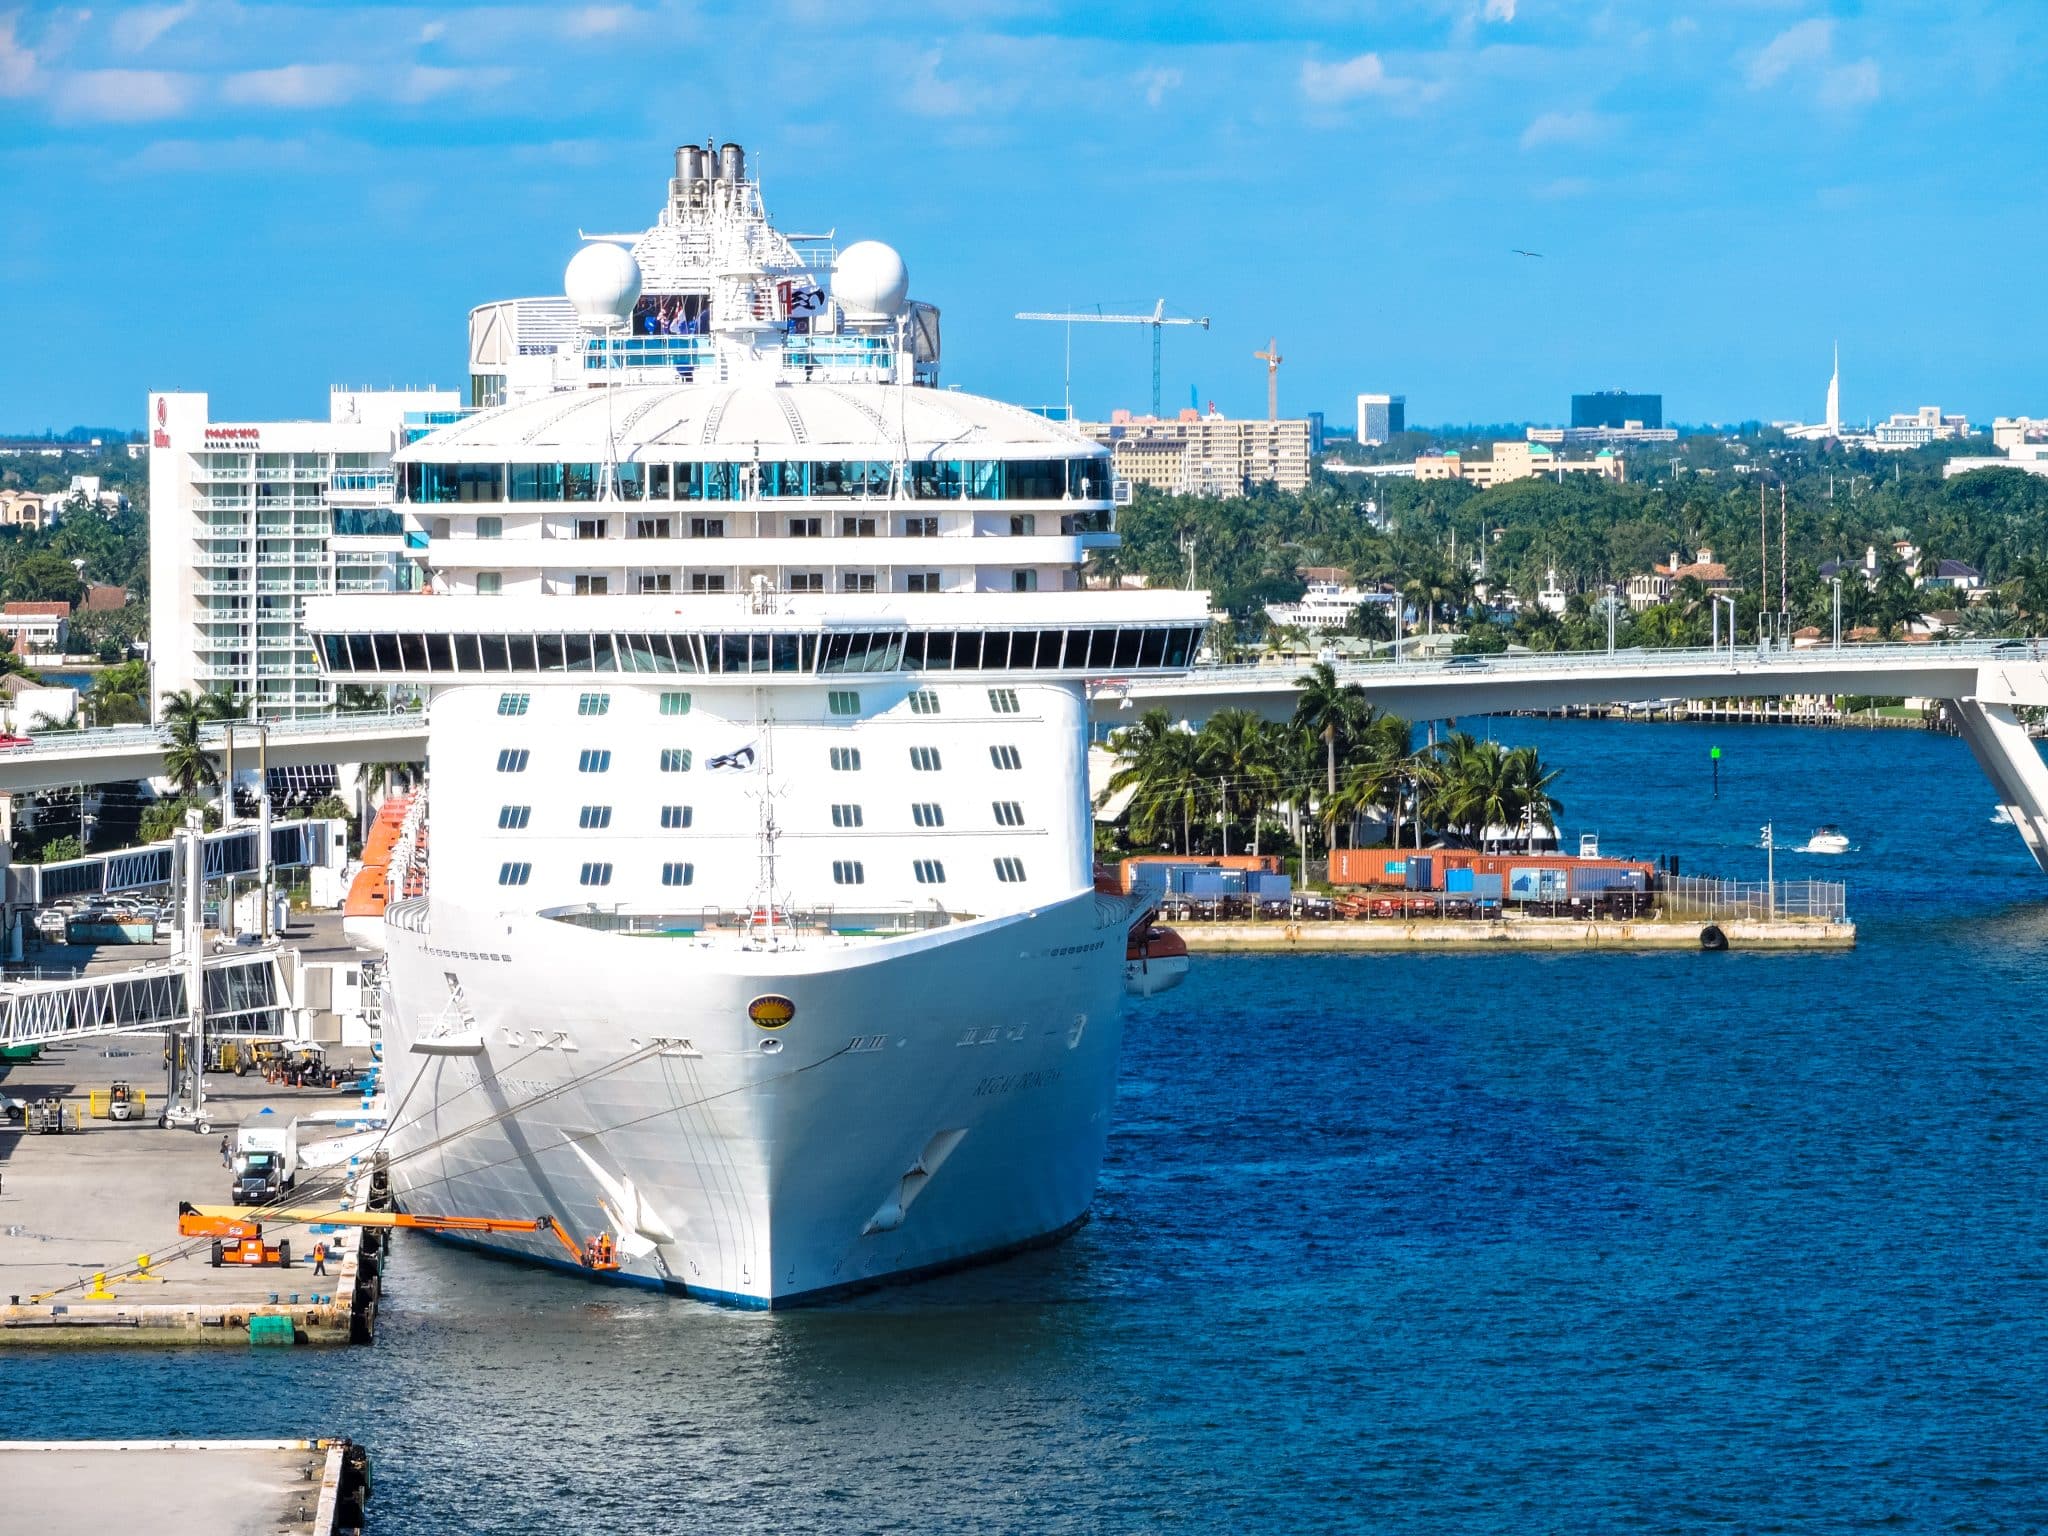 Princess cruise ship at Port Everglades